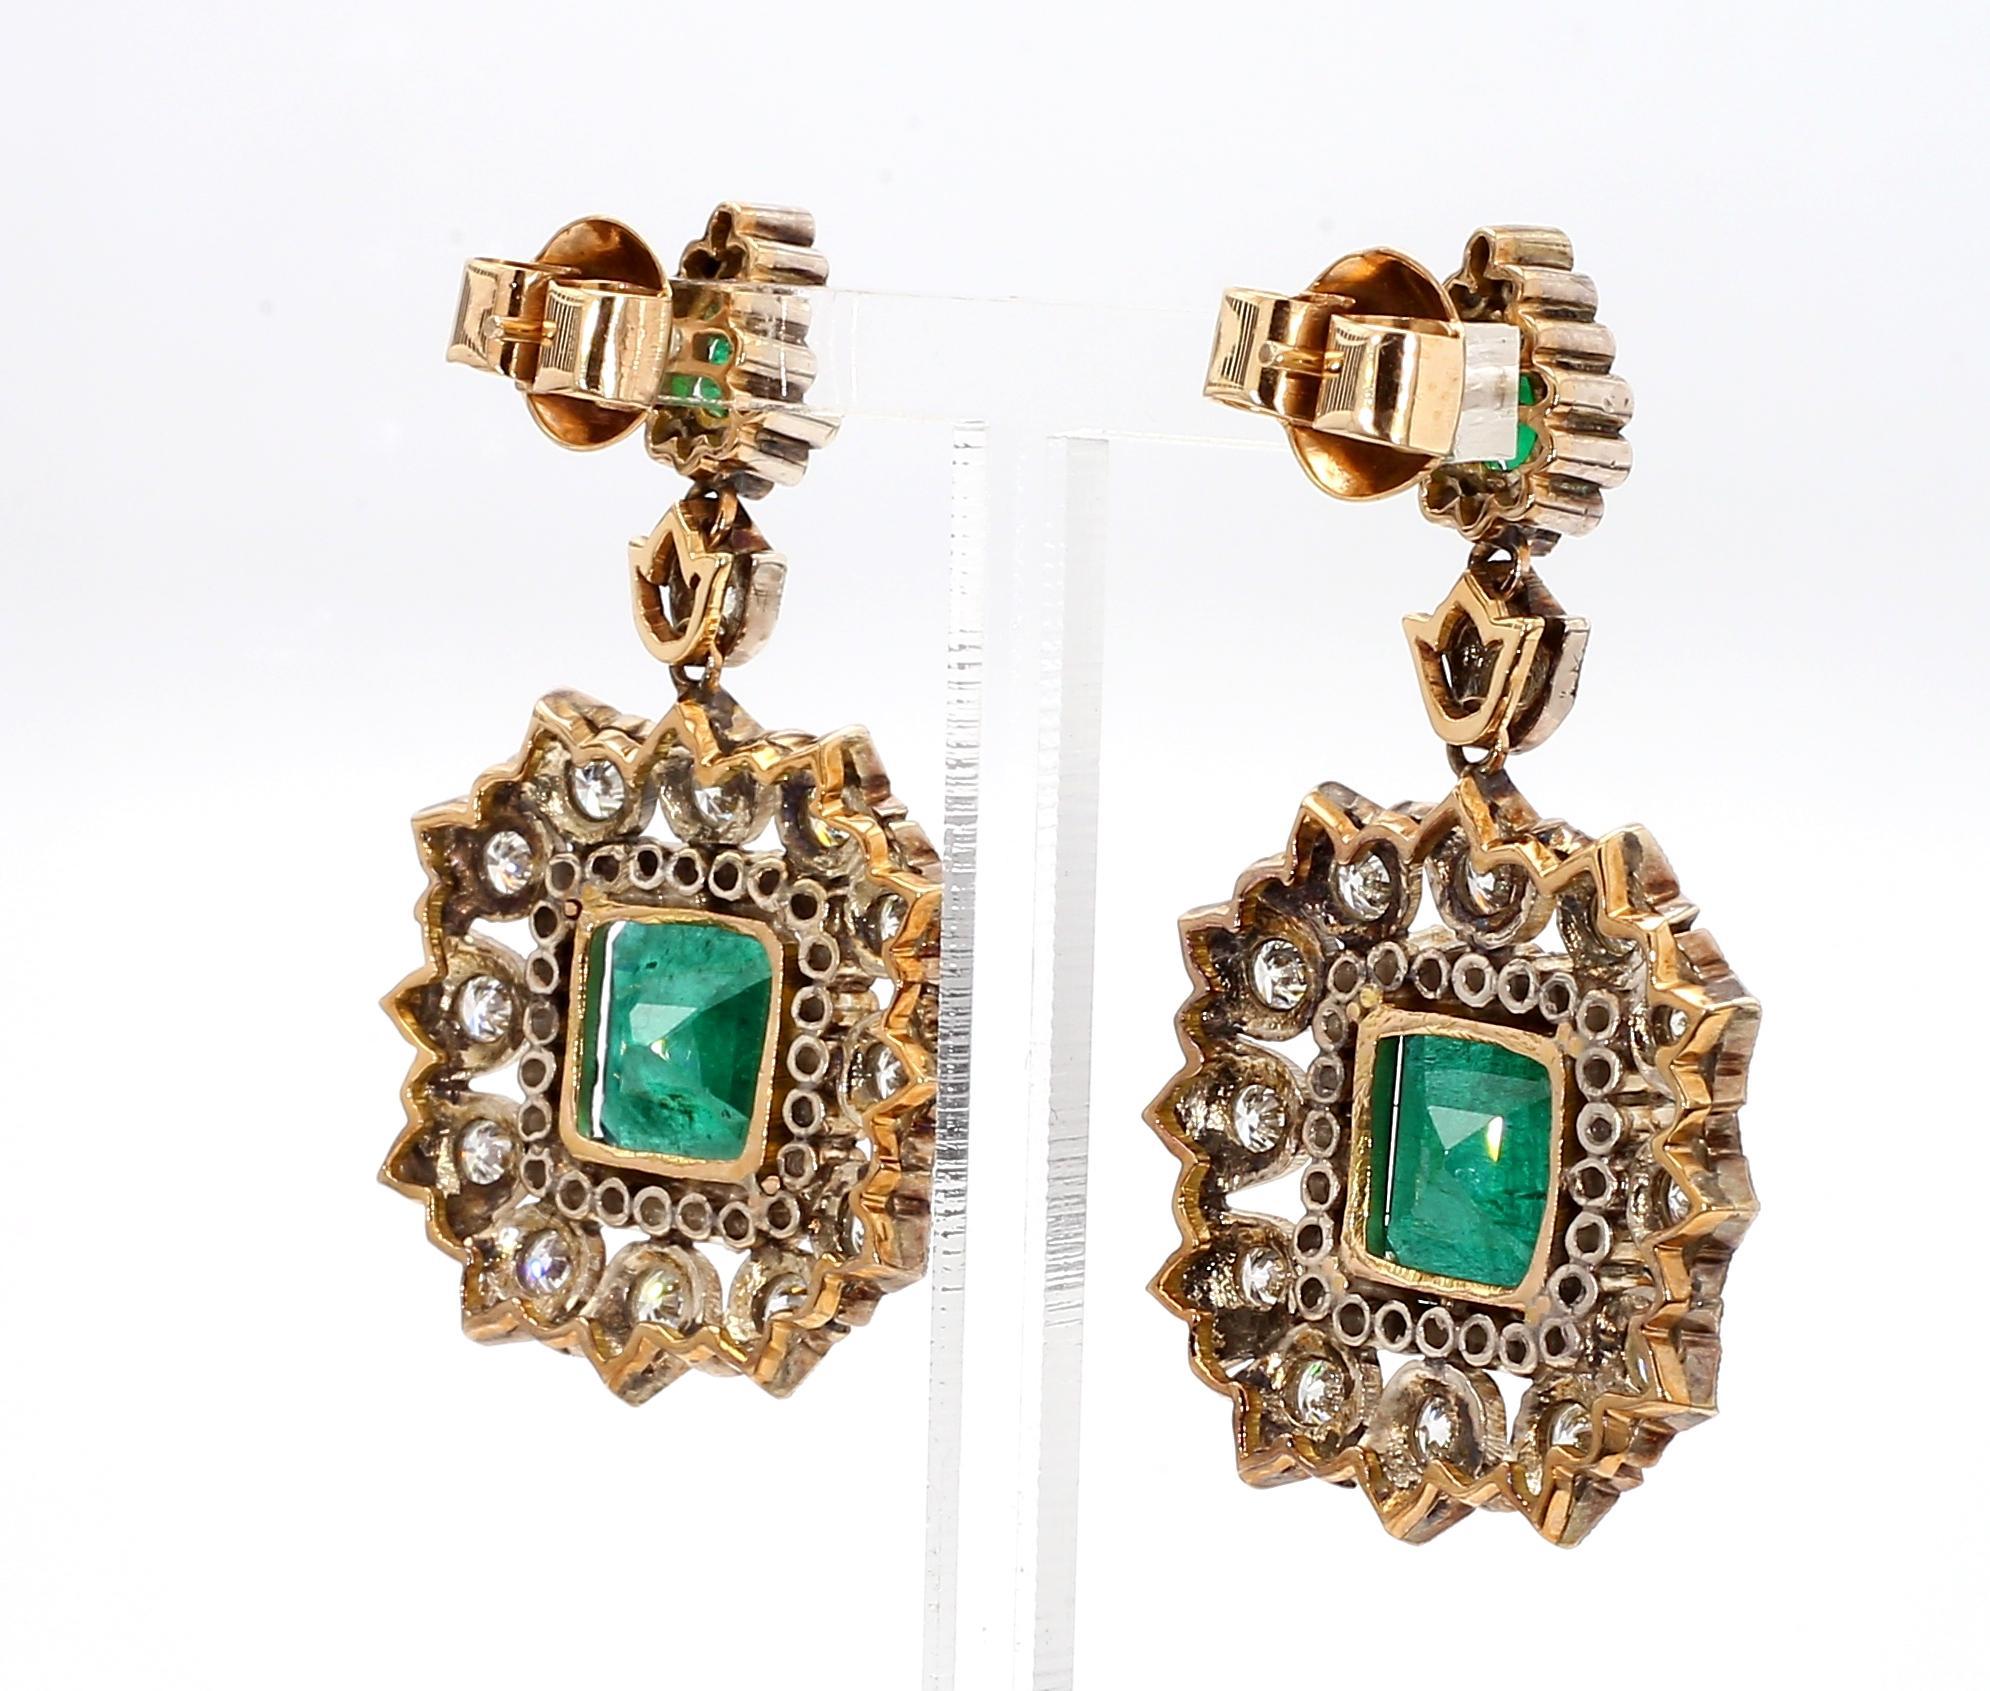 The York - 16.1 Carat Zambian Emerald and 5.4 Carat Diamond Earrings 18K Gold For Sale 3